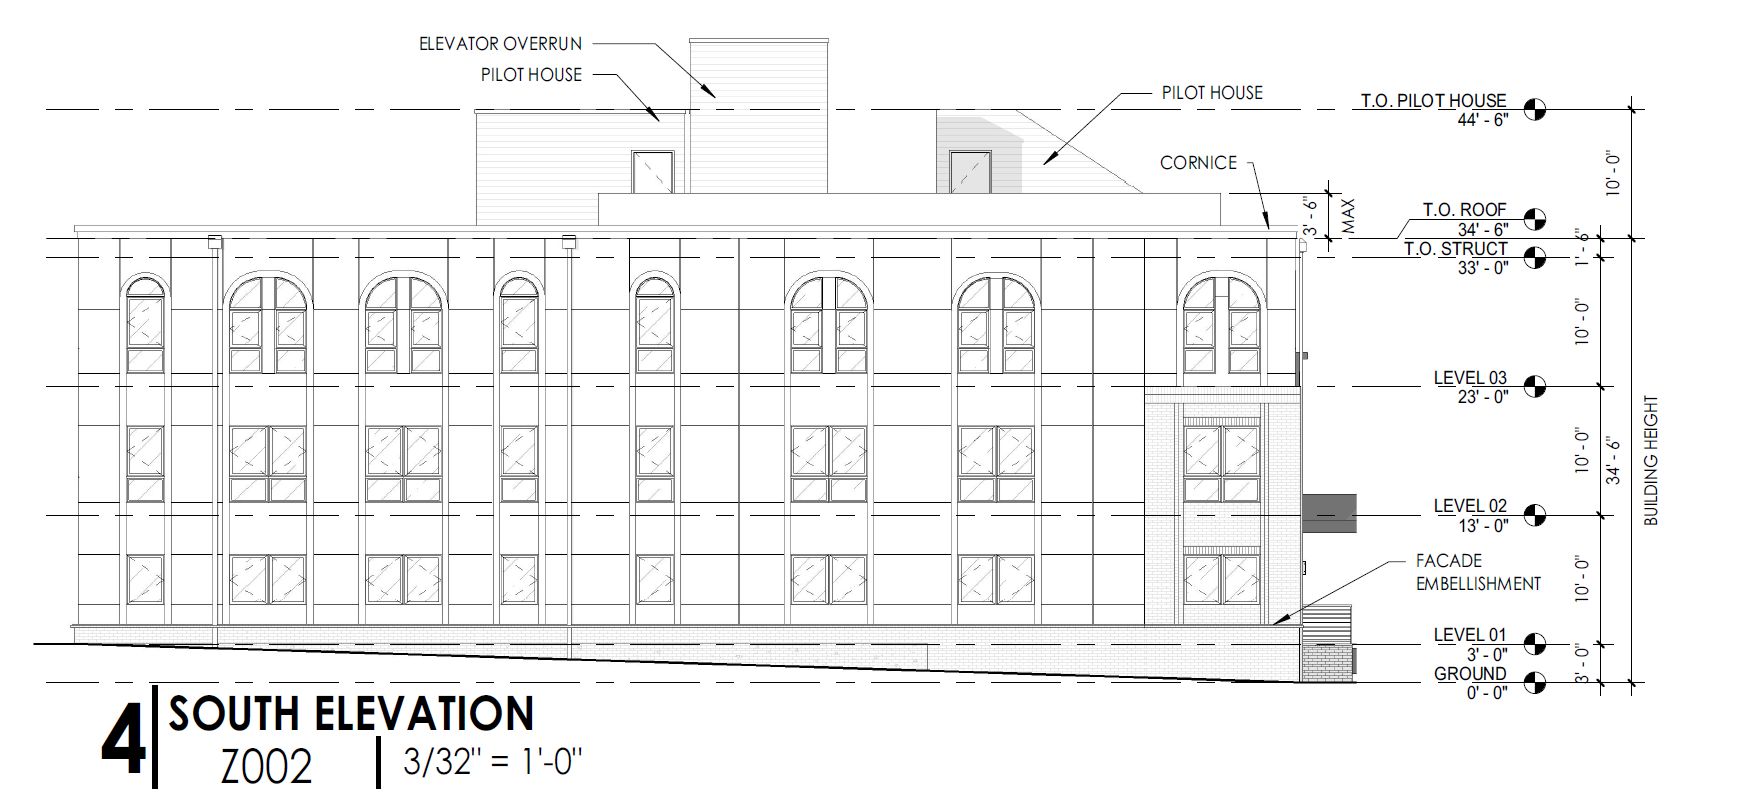 3120 North Park Avenue. Building elevation. Credit: Designblendz via the City of Philadelphia